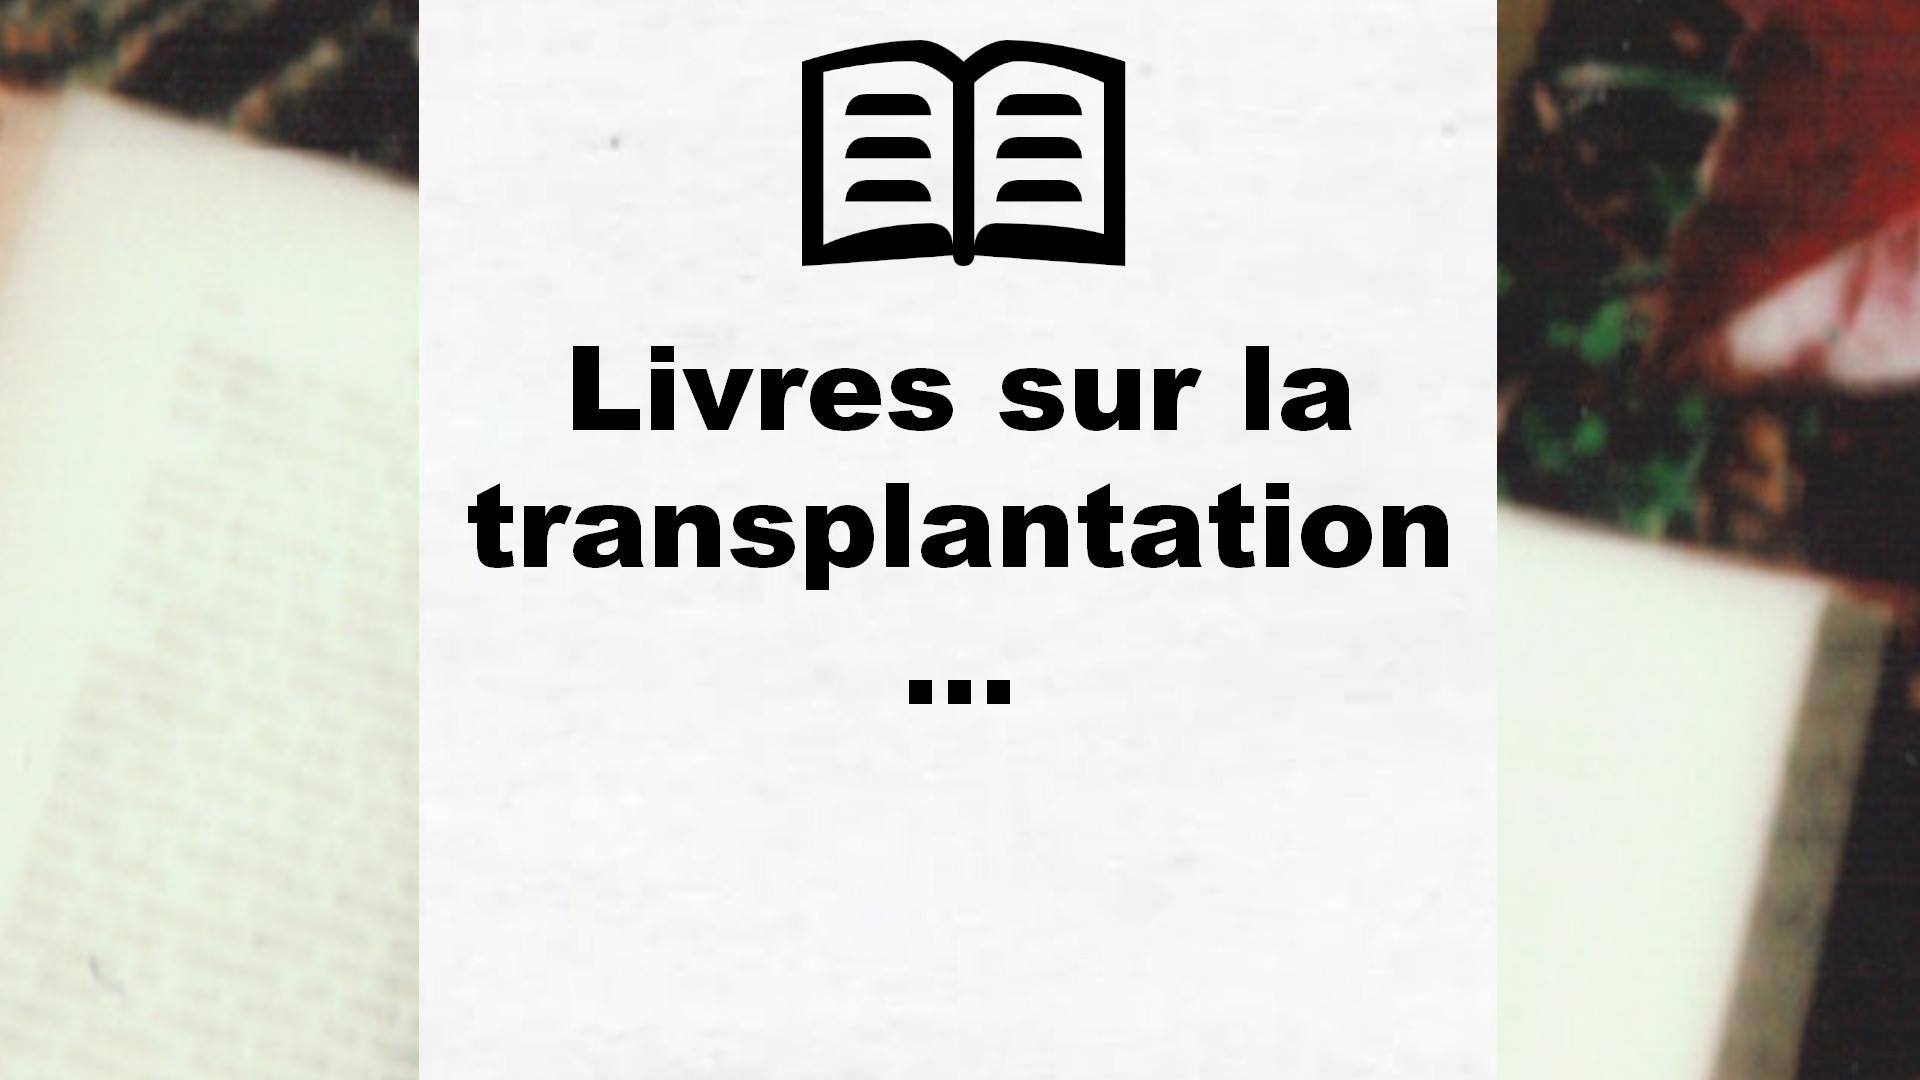 Livres sur la transplantation cardiaque